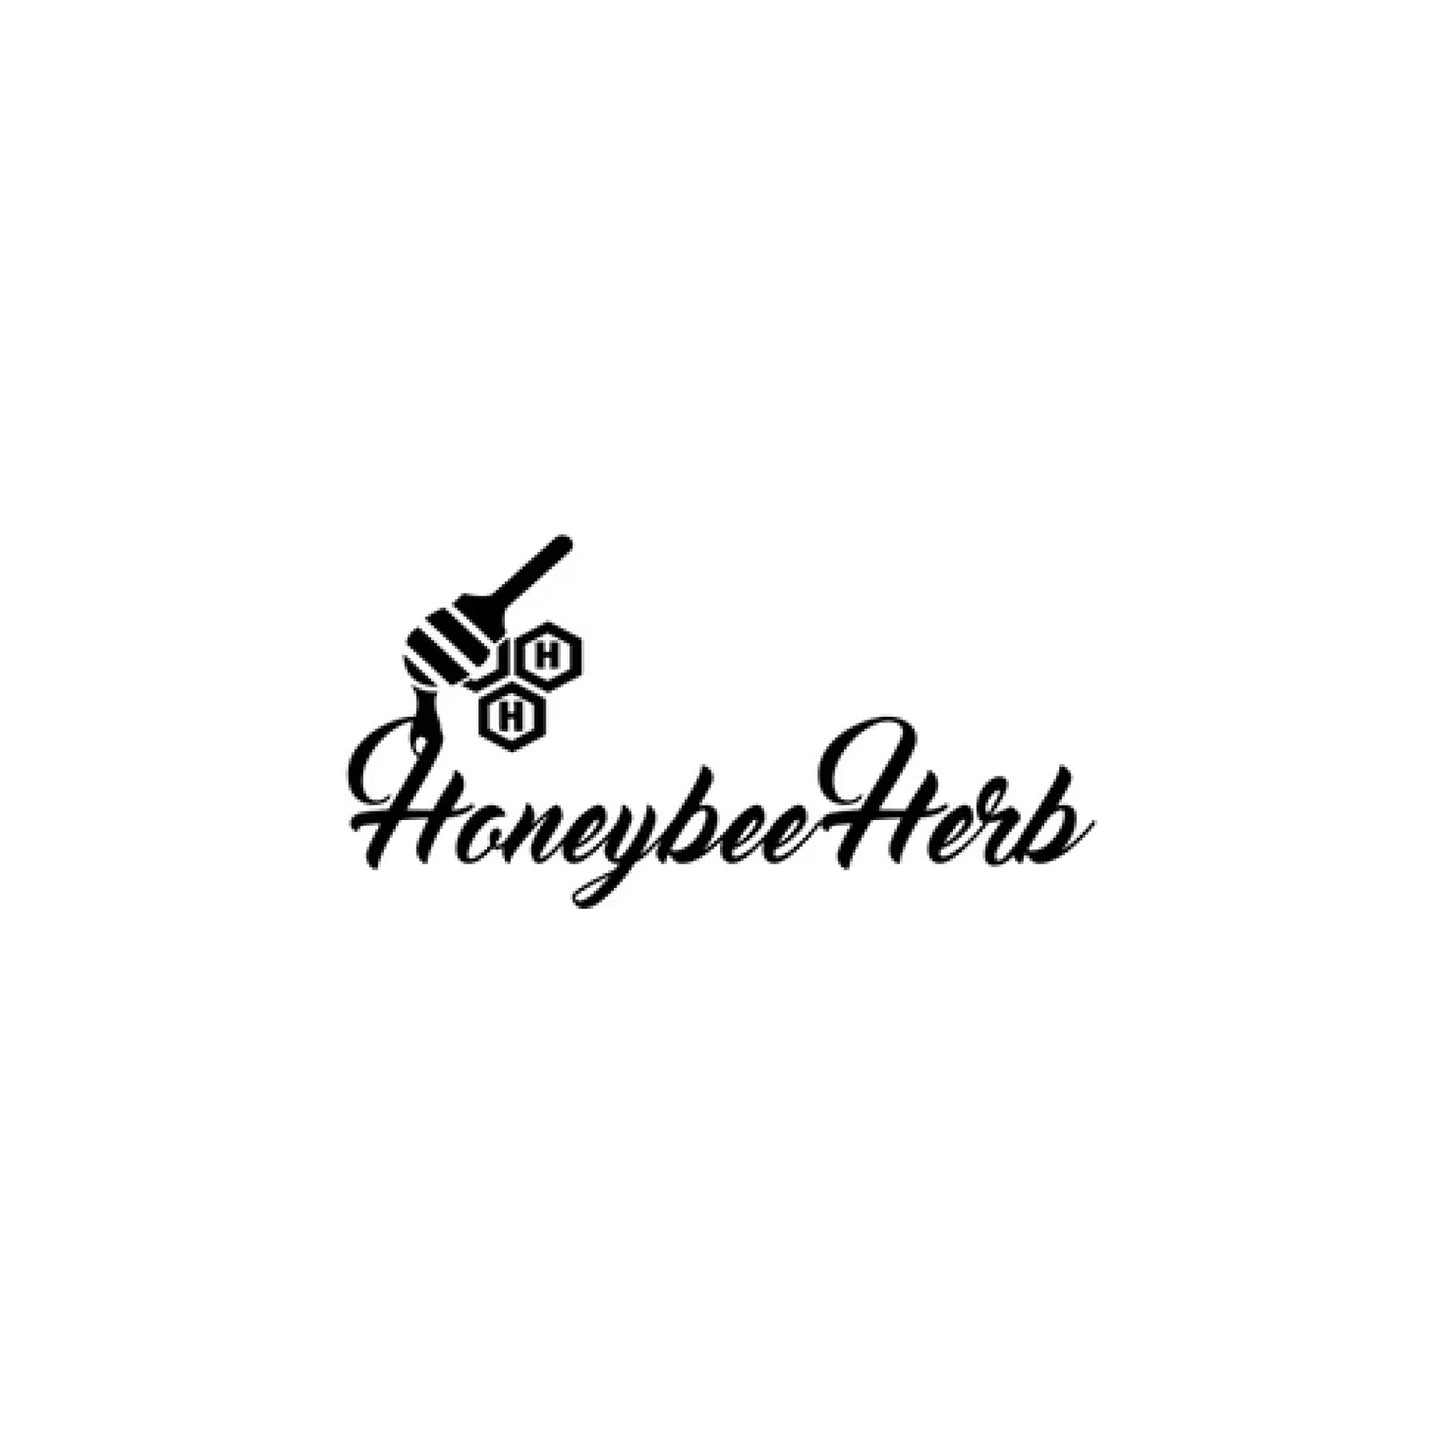 HoneyBee Herb